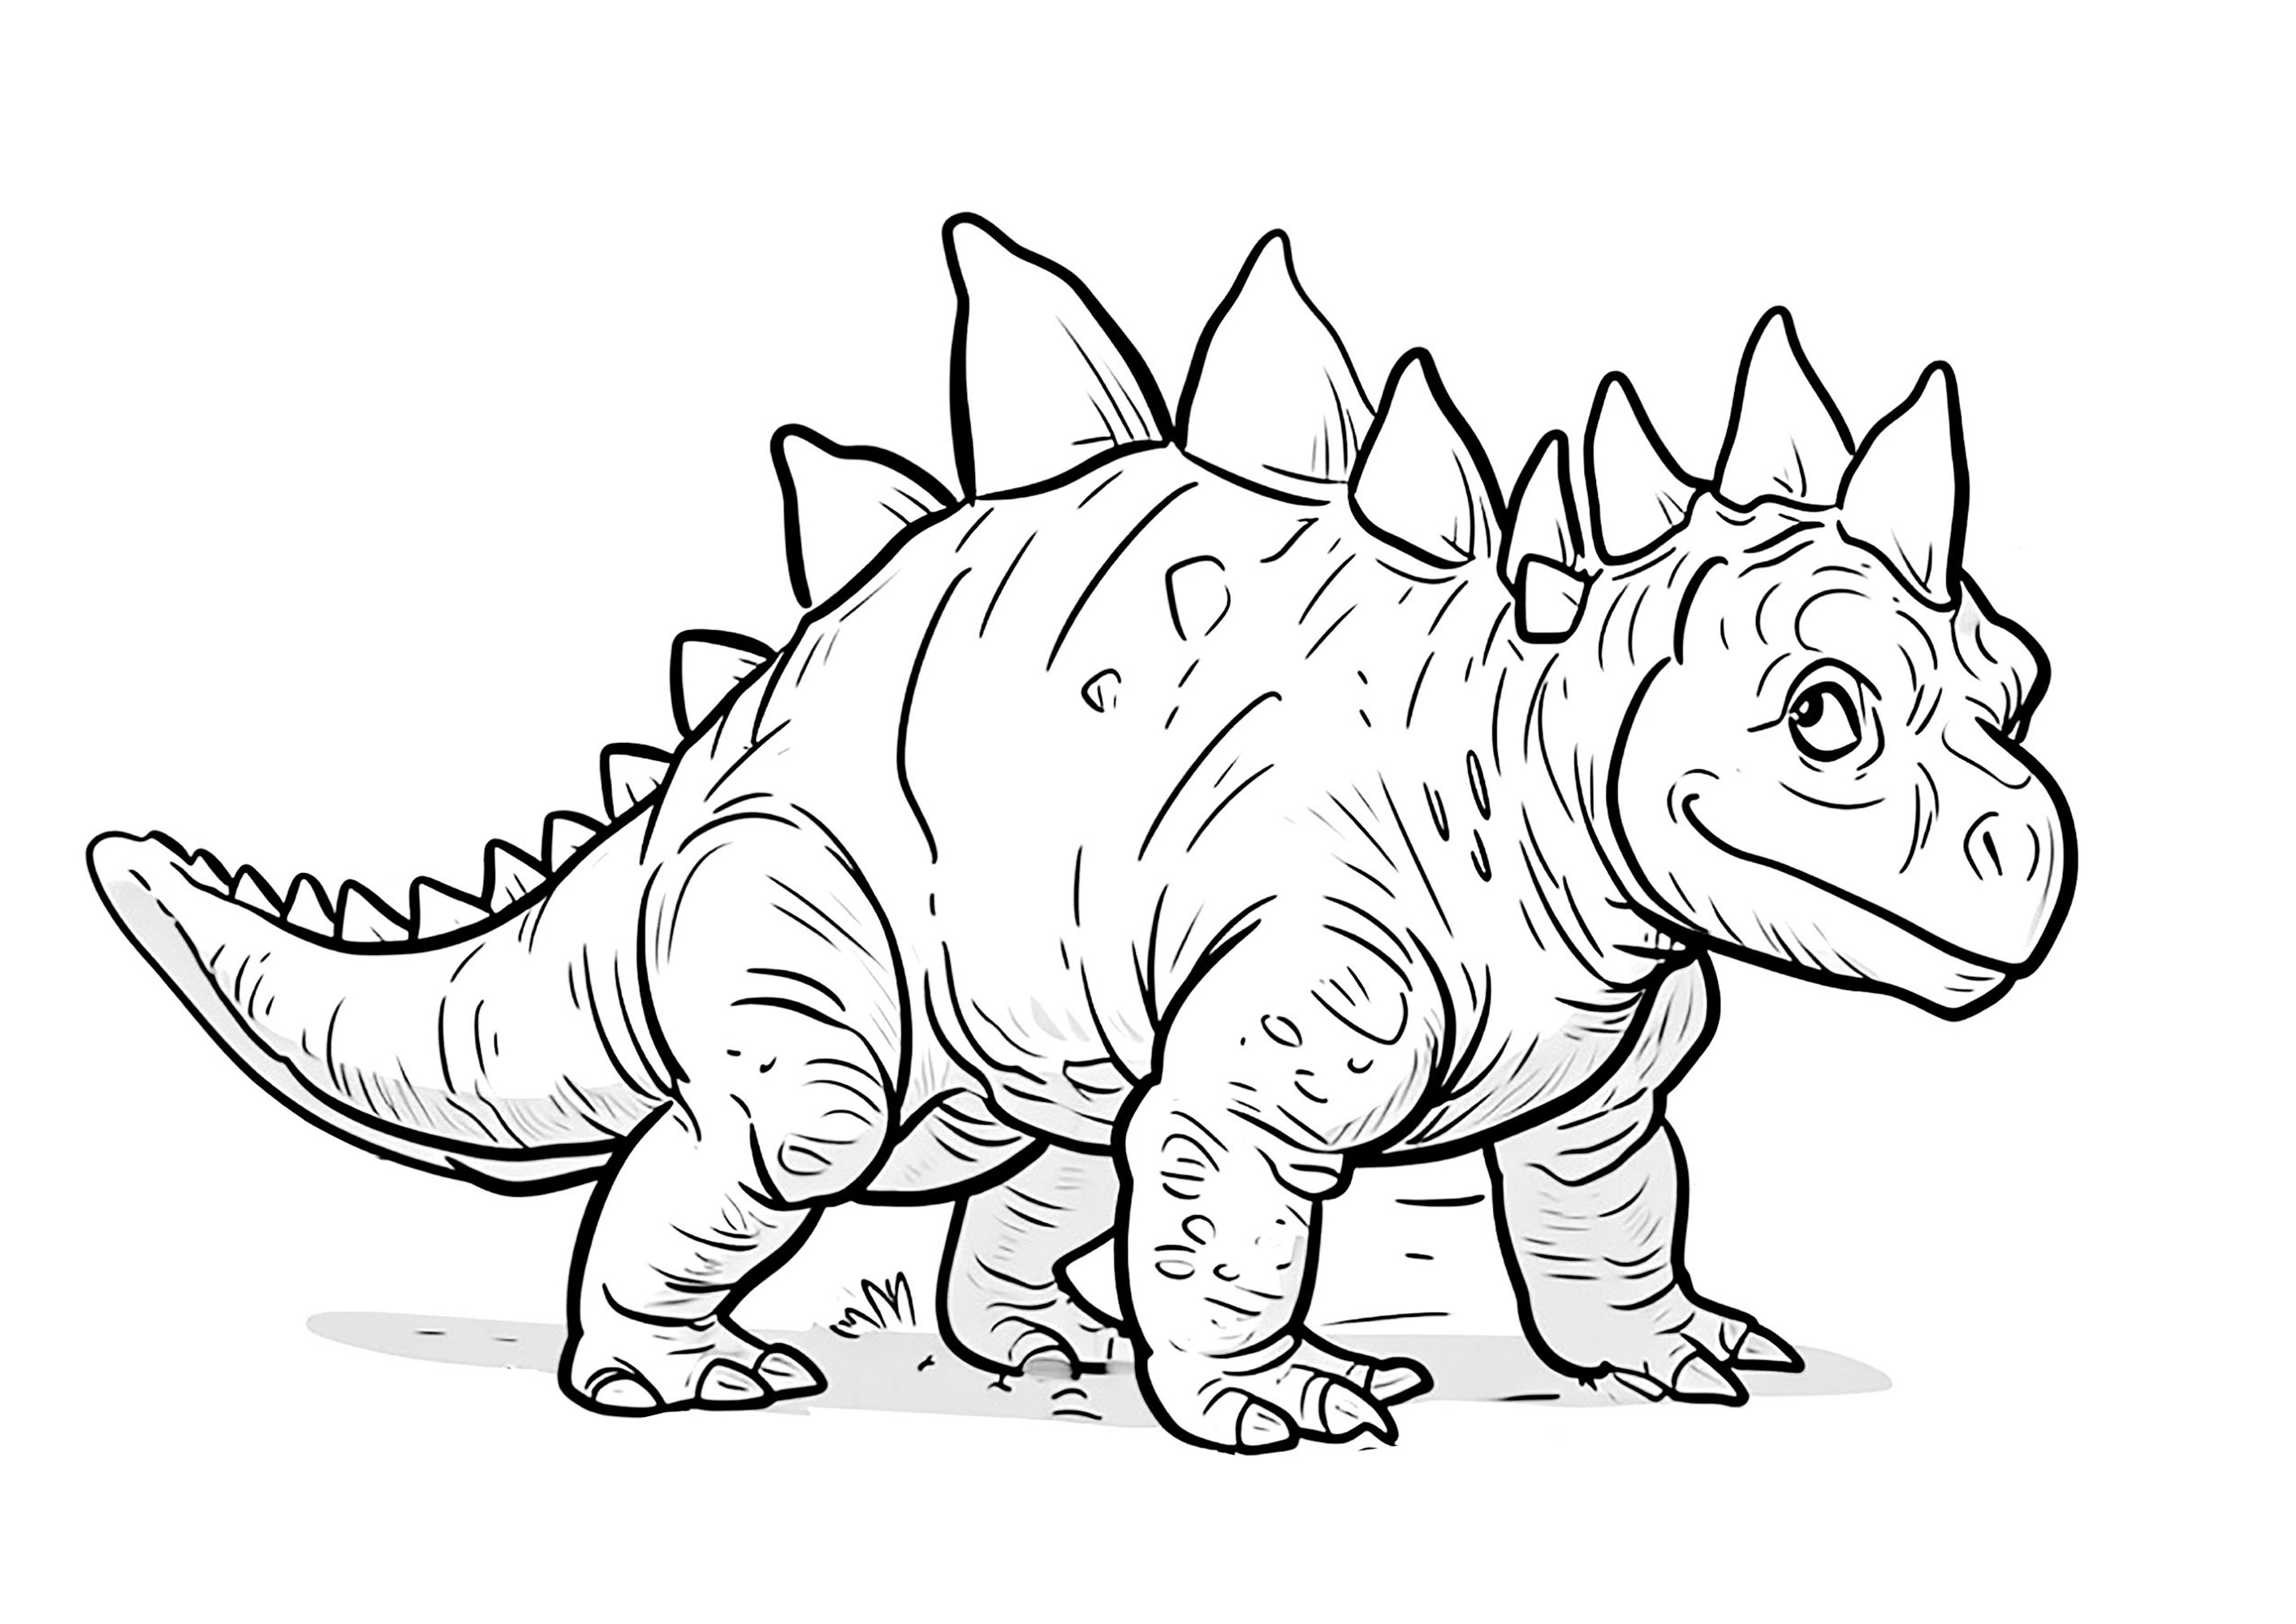 Stegosaurus coloring sheet - Dinosaurs Kids Coloring Pages